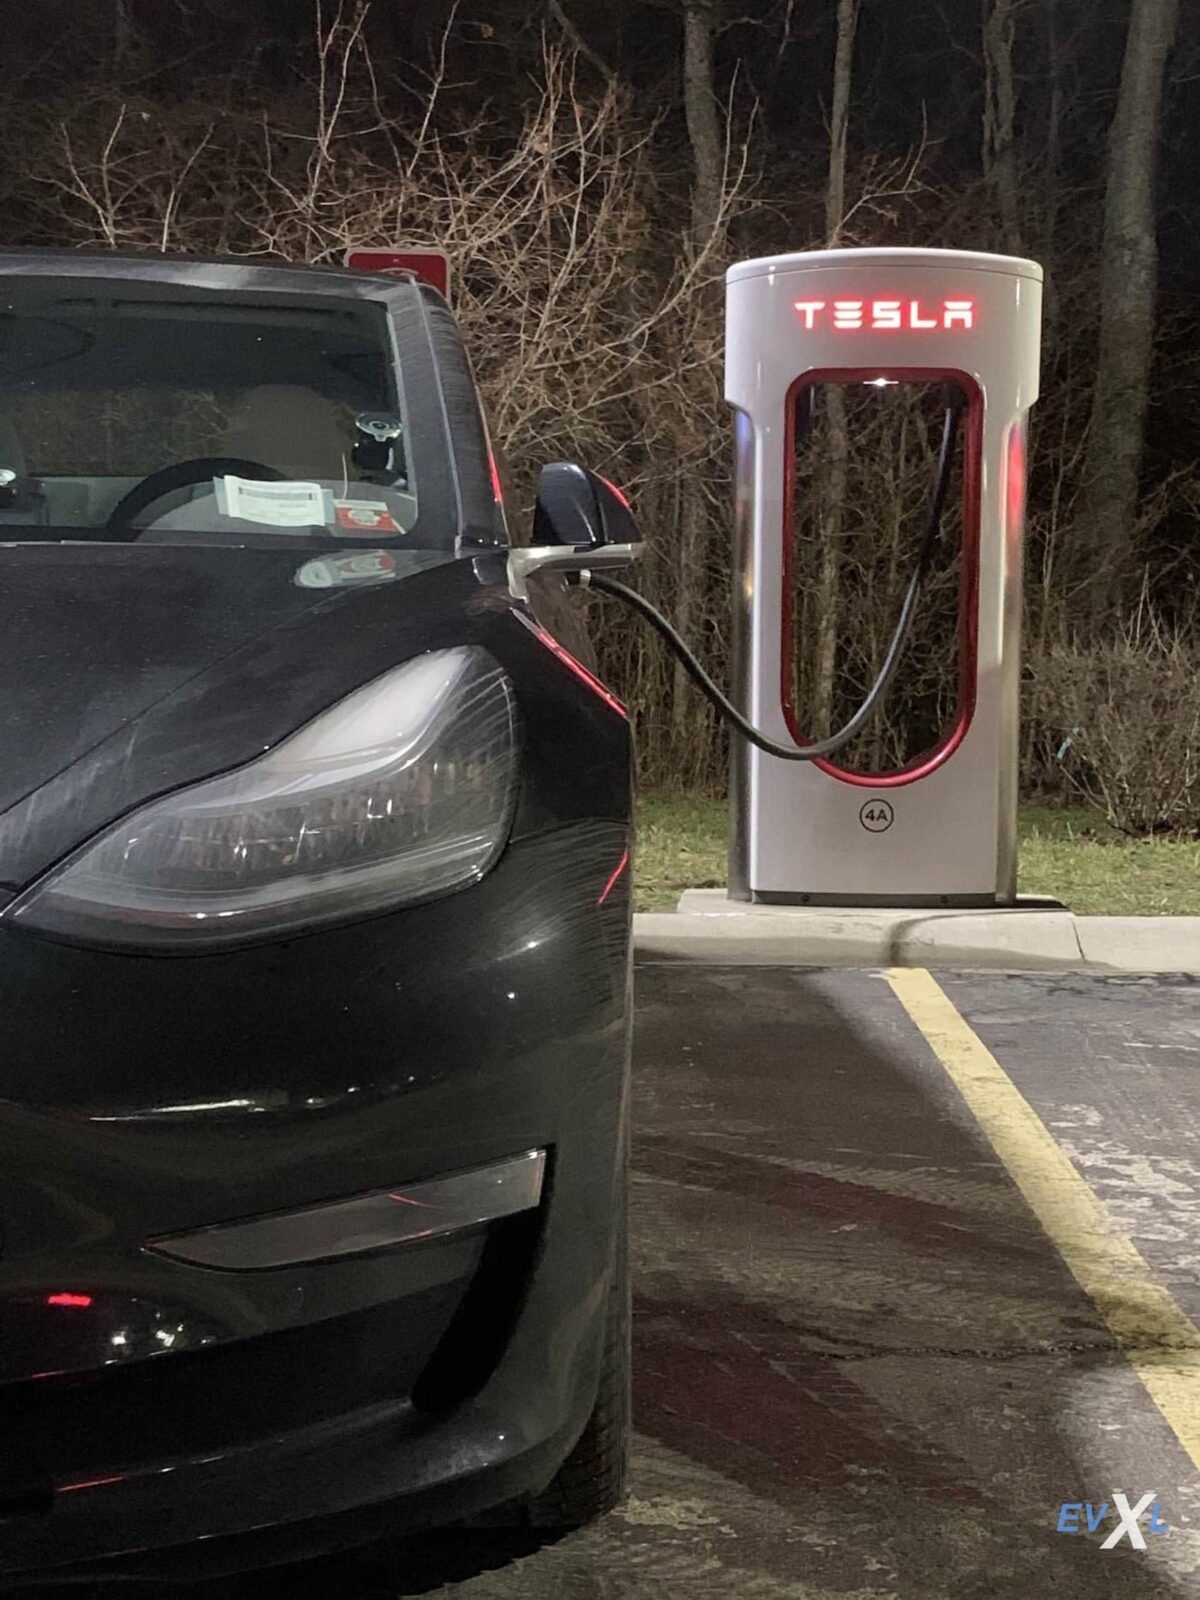 Tesla'S Power Move: Free Supercharging Sparks Sales